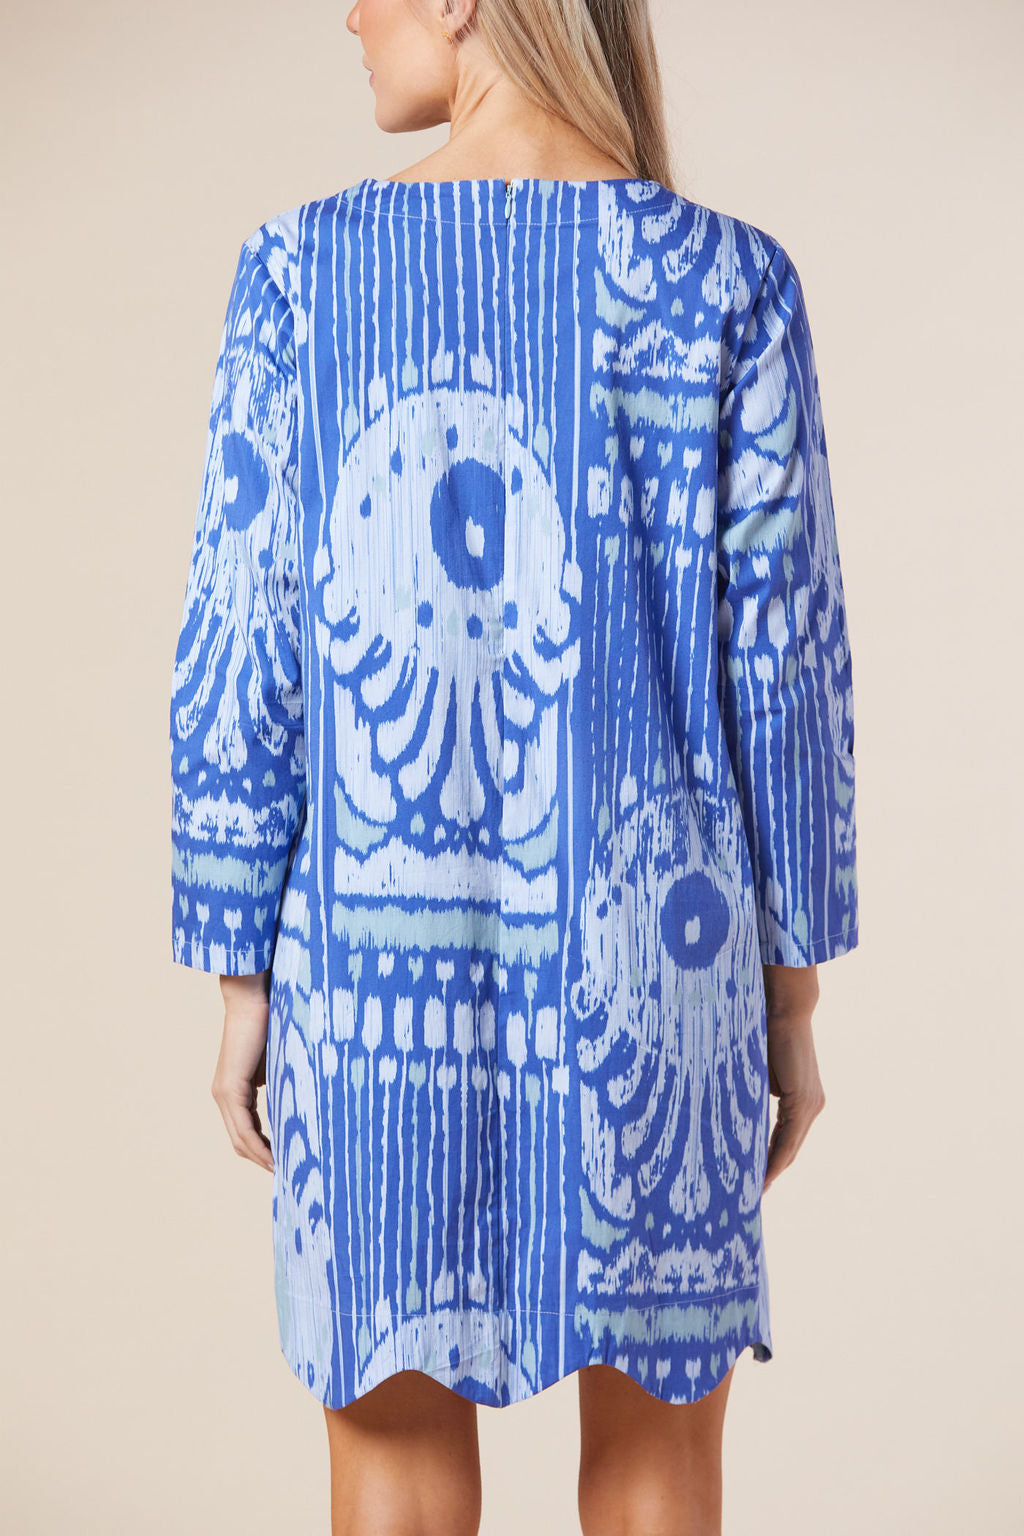 Blair Dress in Blue Moroccan Ikat